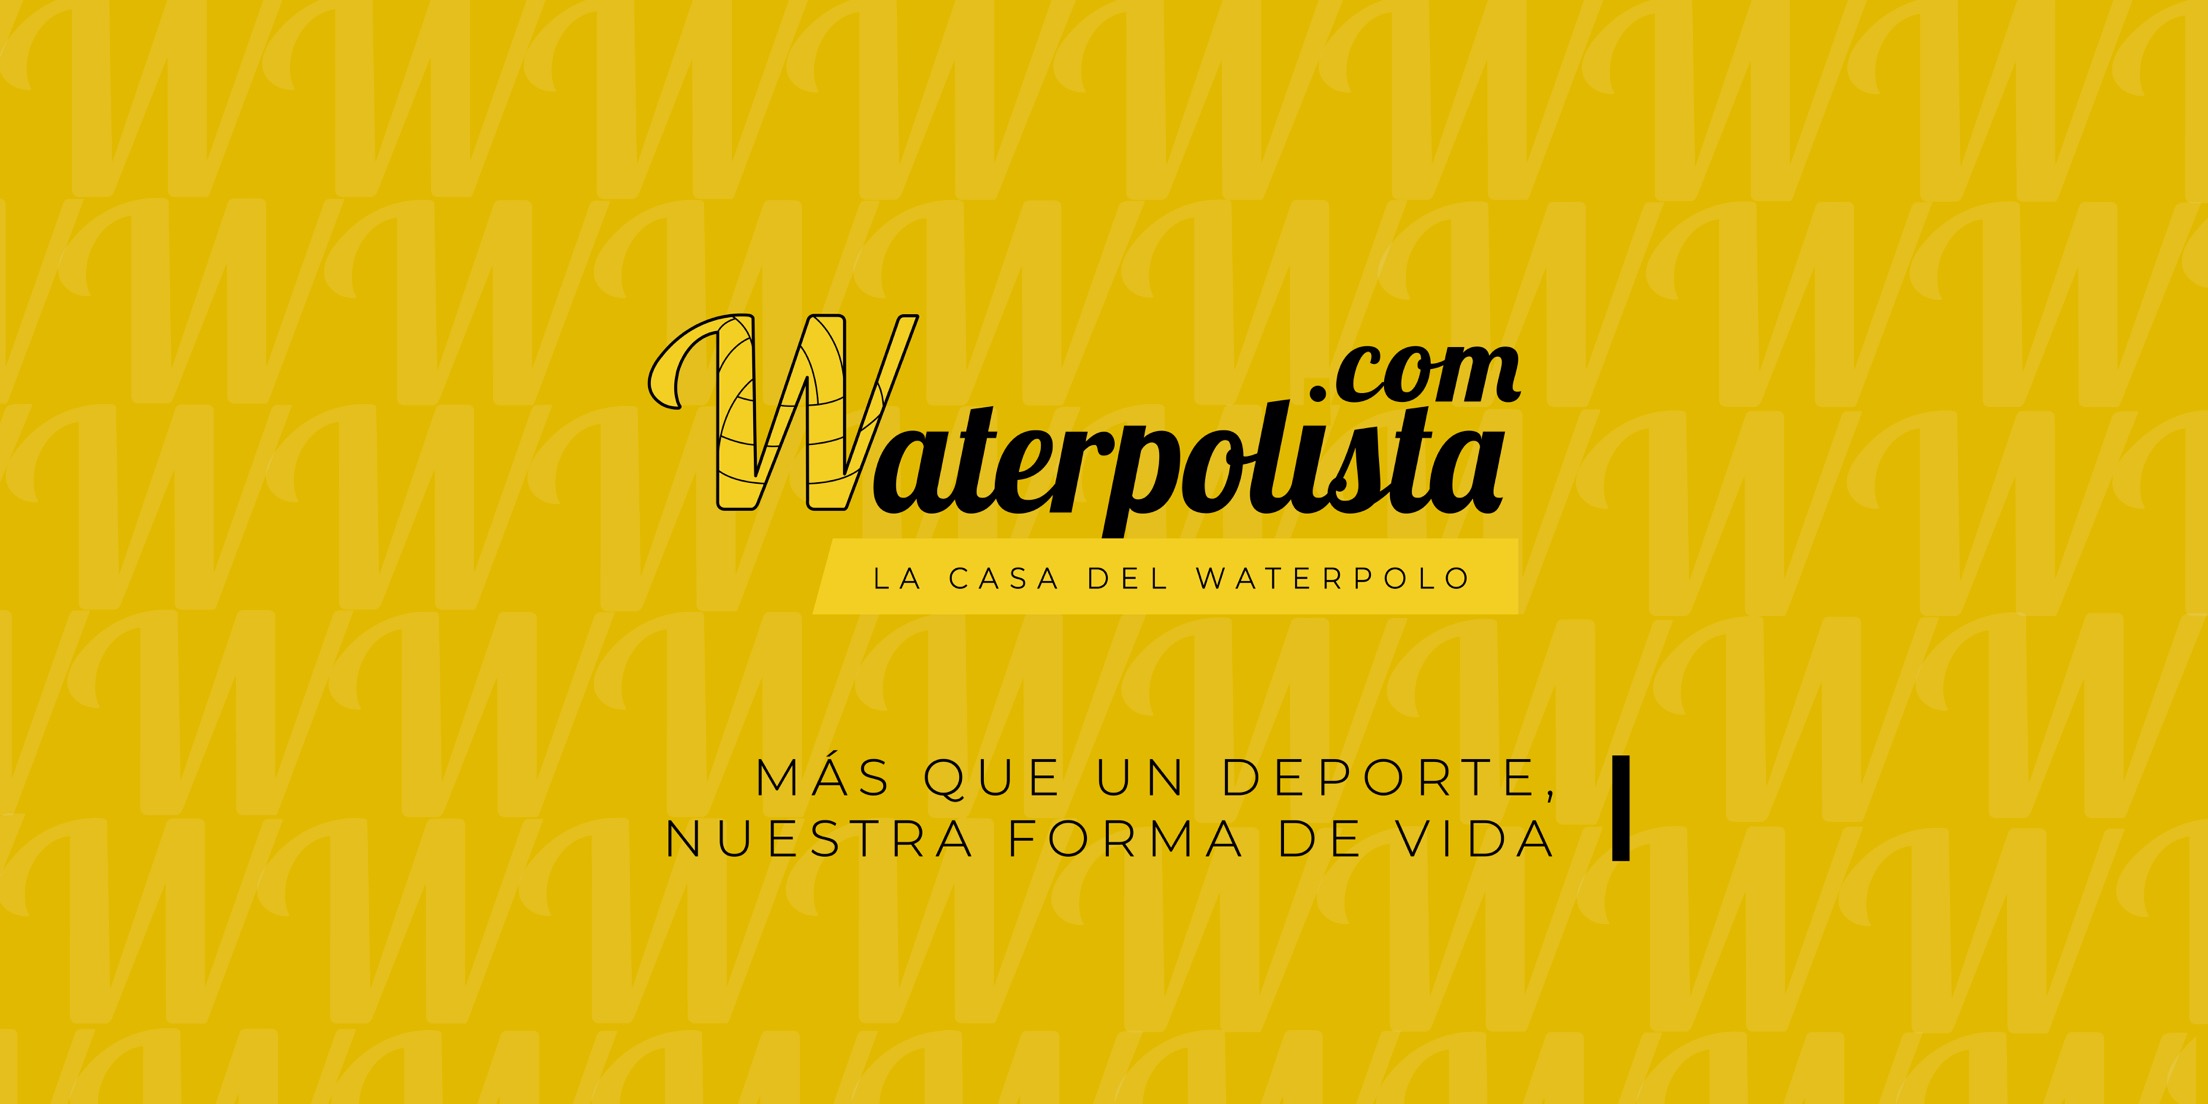 (c) Waterpolista.com